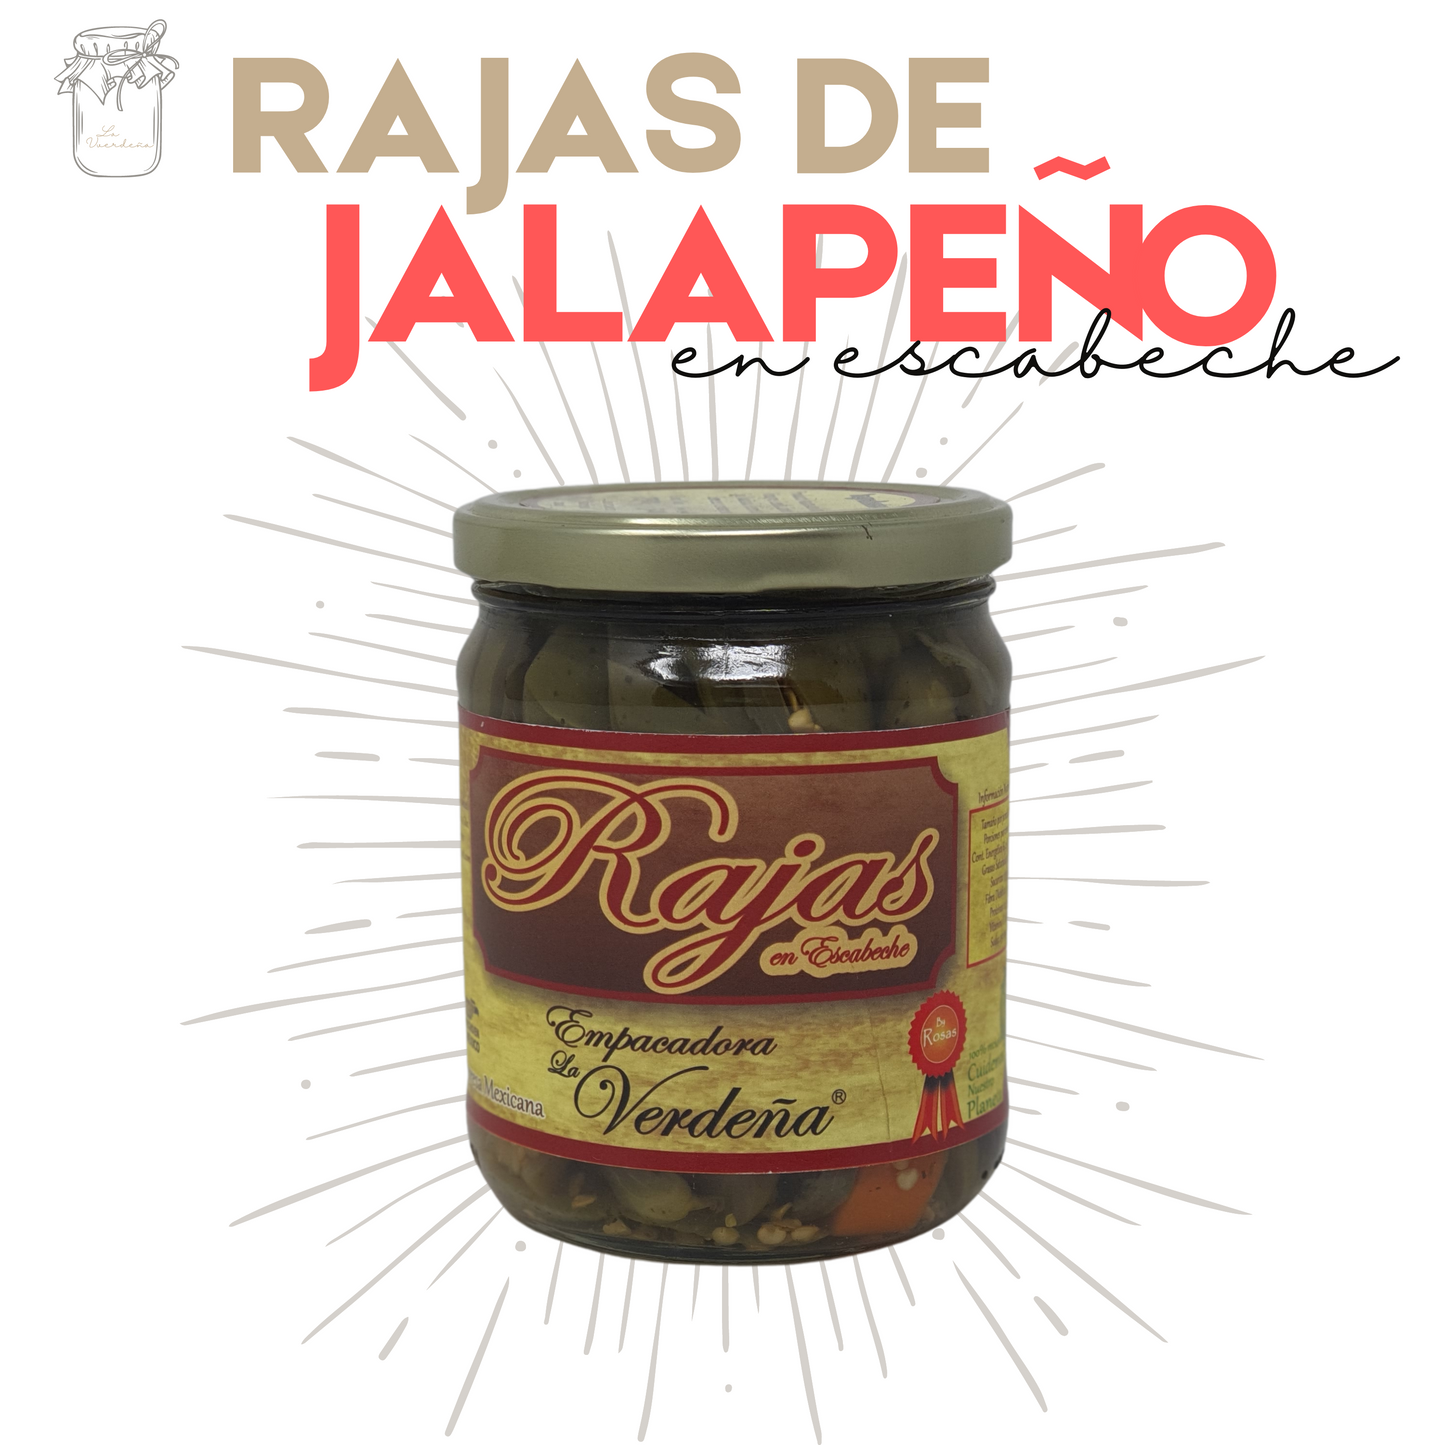 Jalapeño en Escabeche | Rajas | Gourmet | Tradicional | Mexpofood